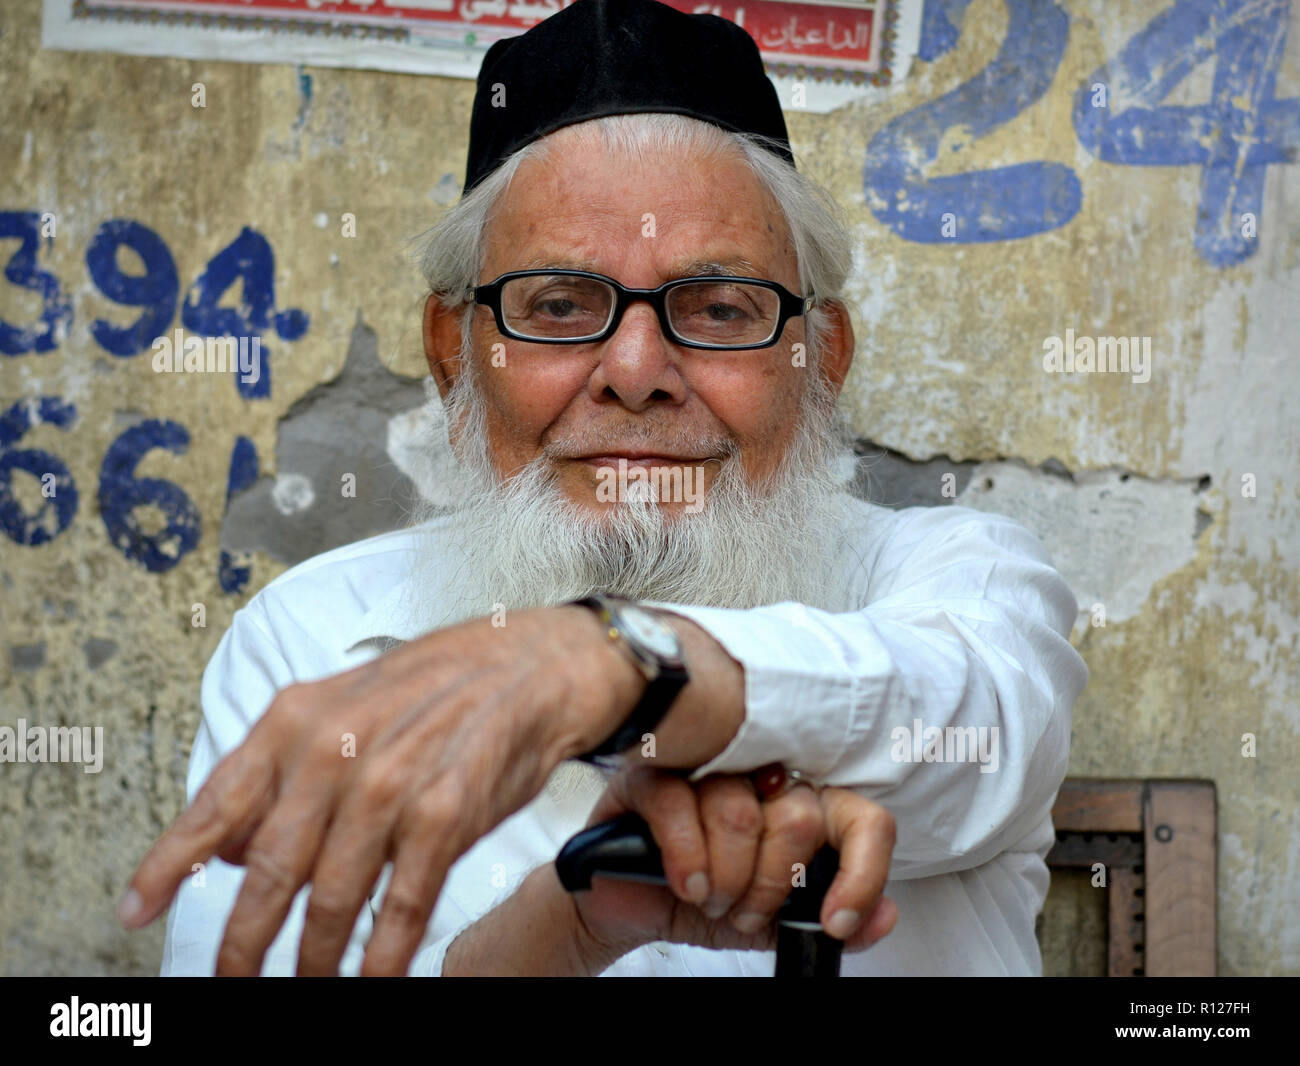 Sitting elderly Indian Muslim man with a white Islamic beard wears his traditional white Islamic clothing and a black skull cap (taqiyah). Stock Photo